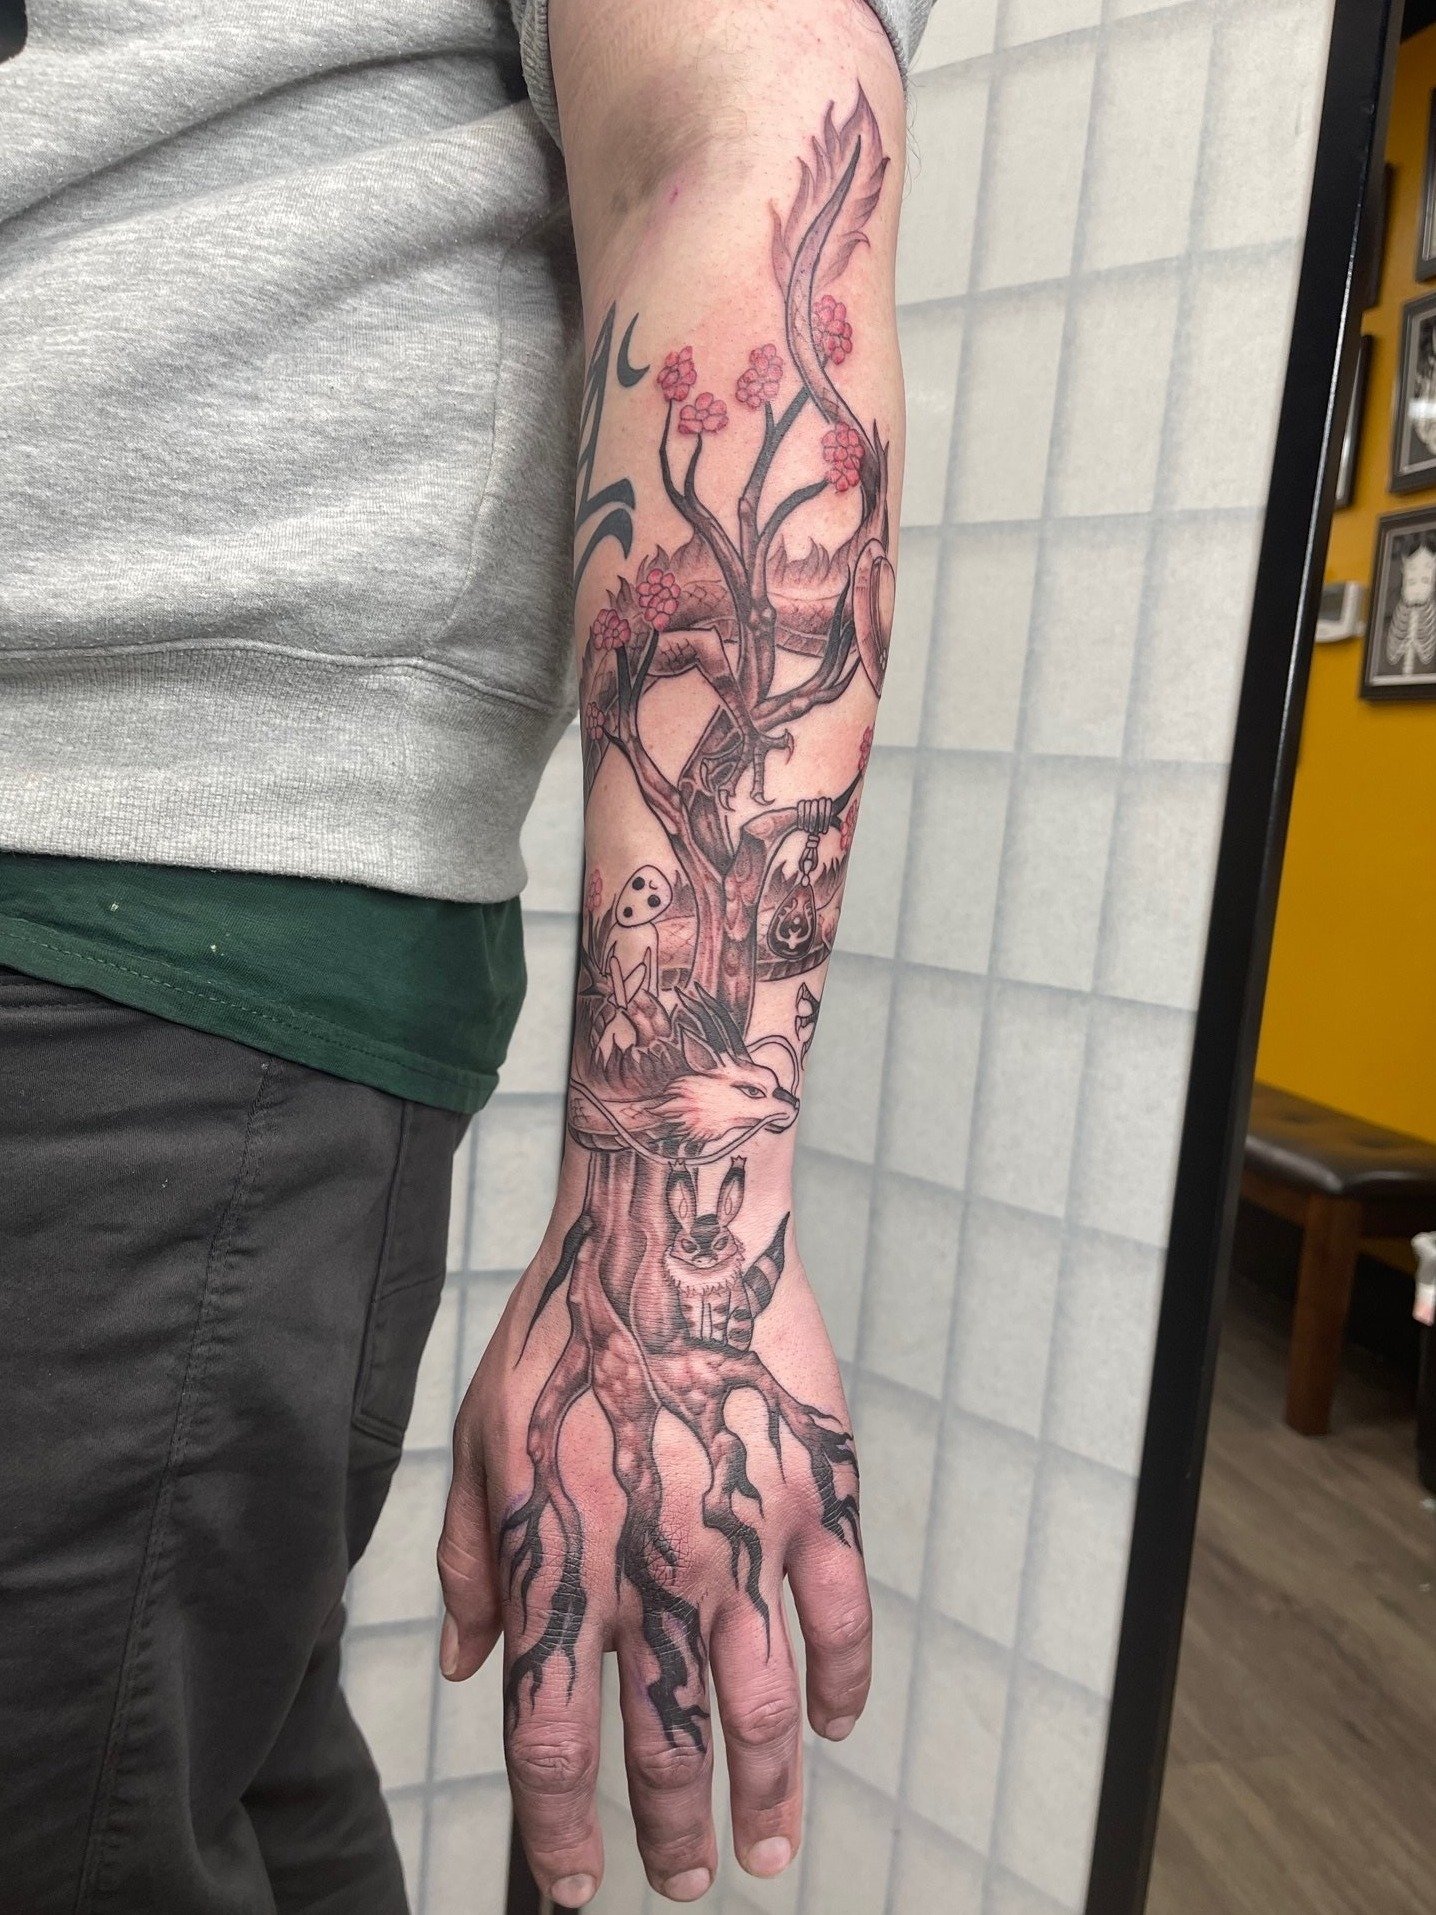 Studio Ghibli arm gauntlet tattoo